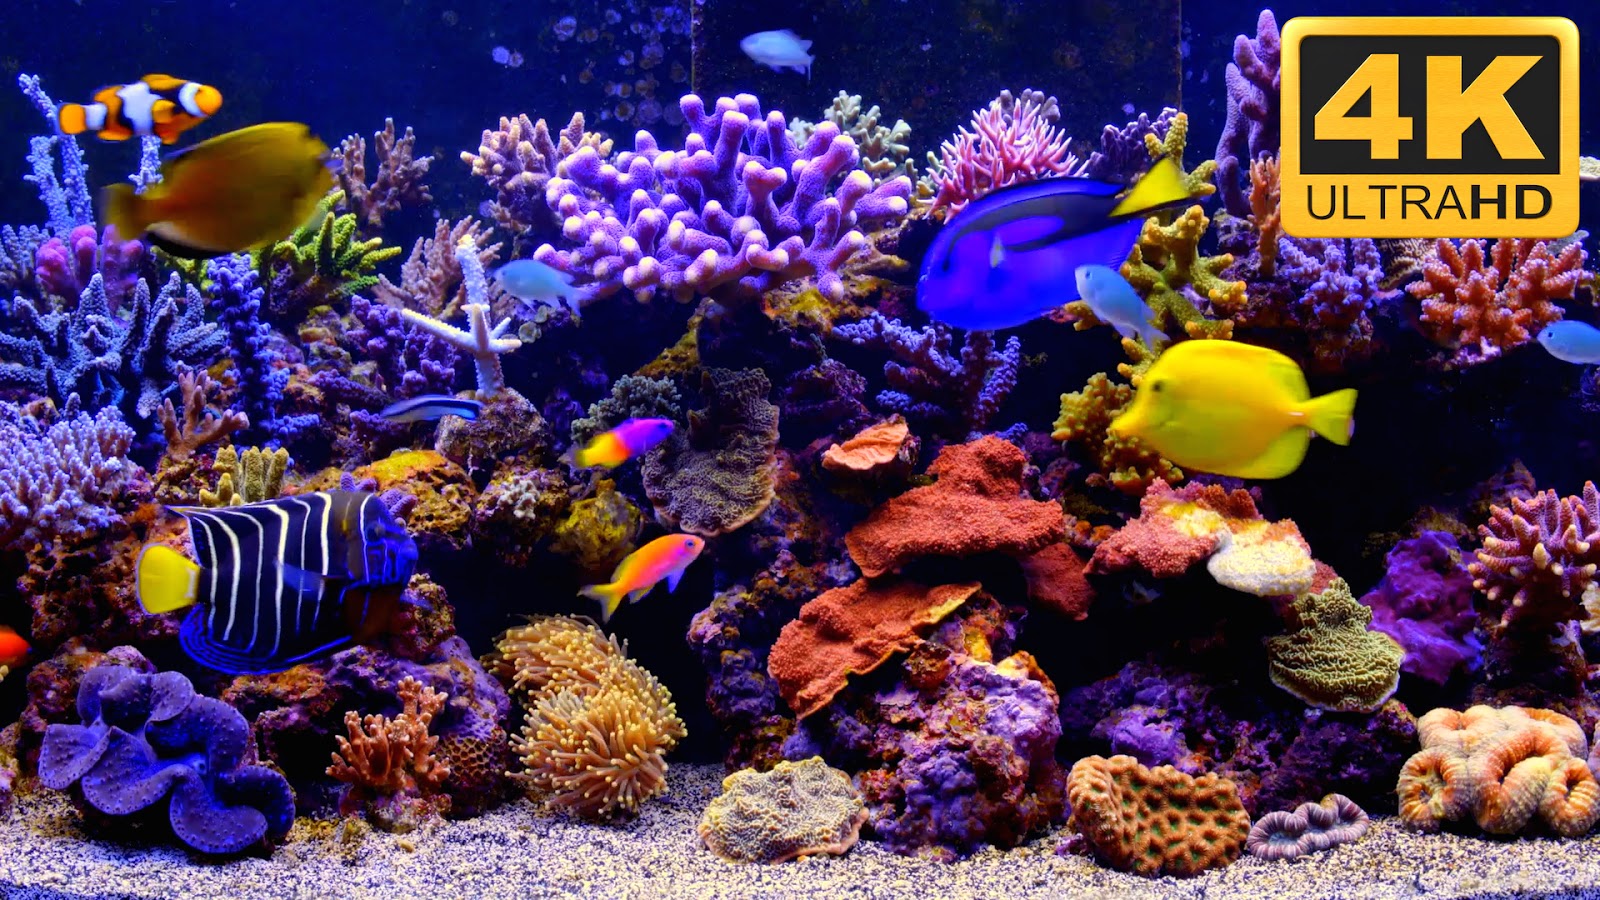 4k Aquarium Video As Desktop Wallpaper